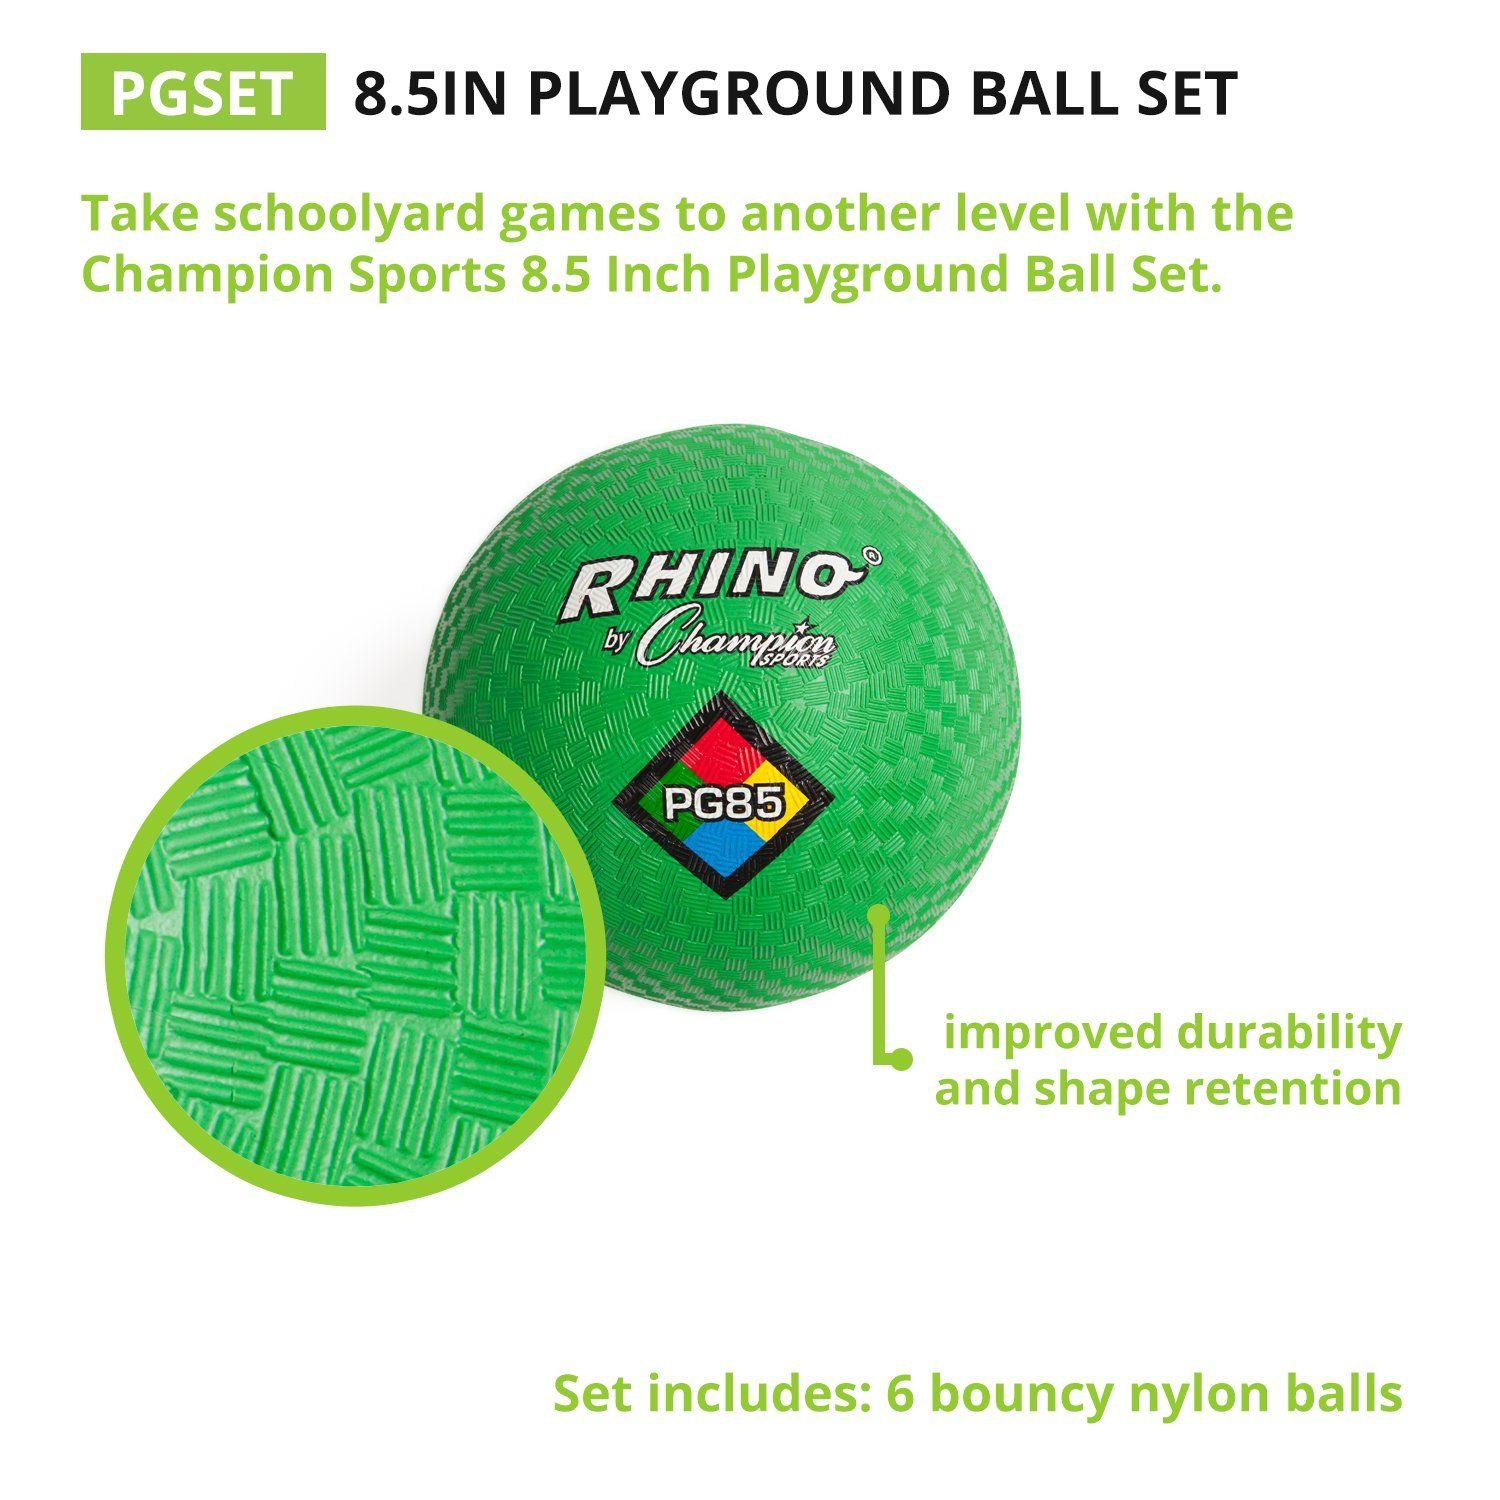 8 Green Ball Logo - Amazon.com : Champion Sports PGSET Playground Ball Set, 8.5